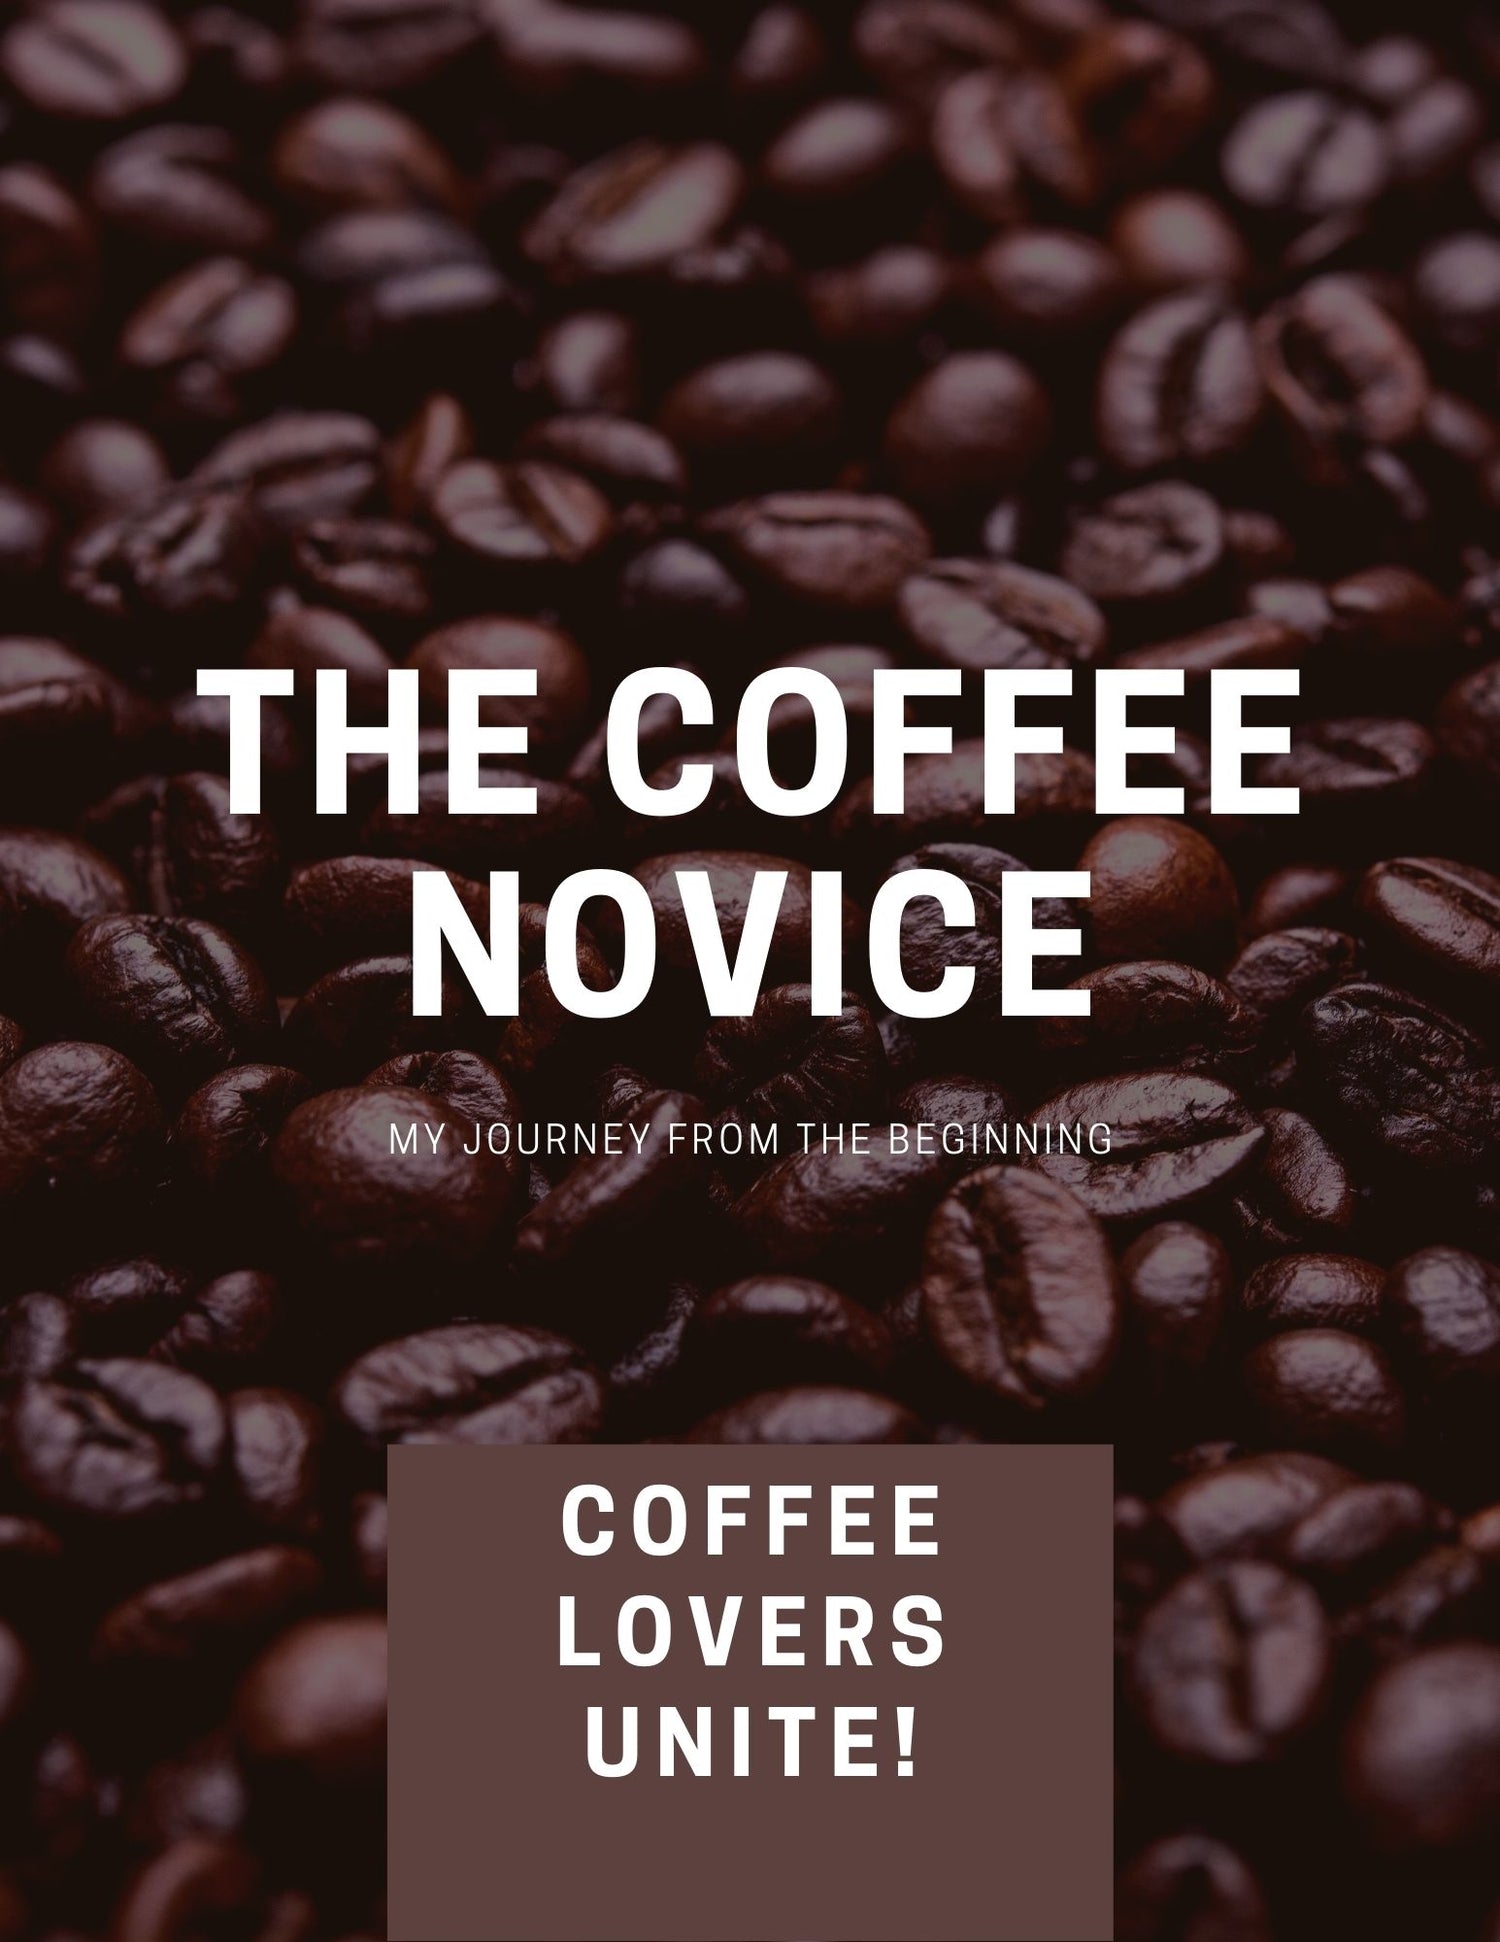 THE COFFEE NOVICE